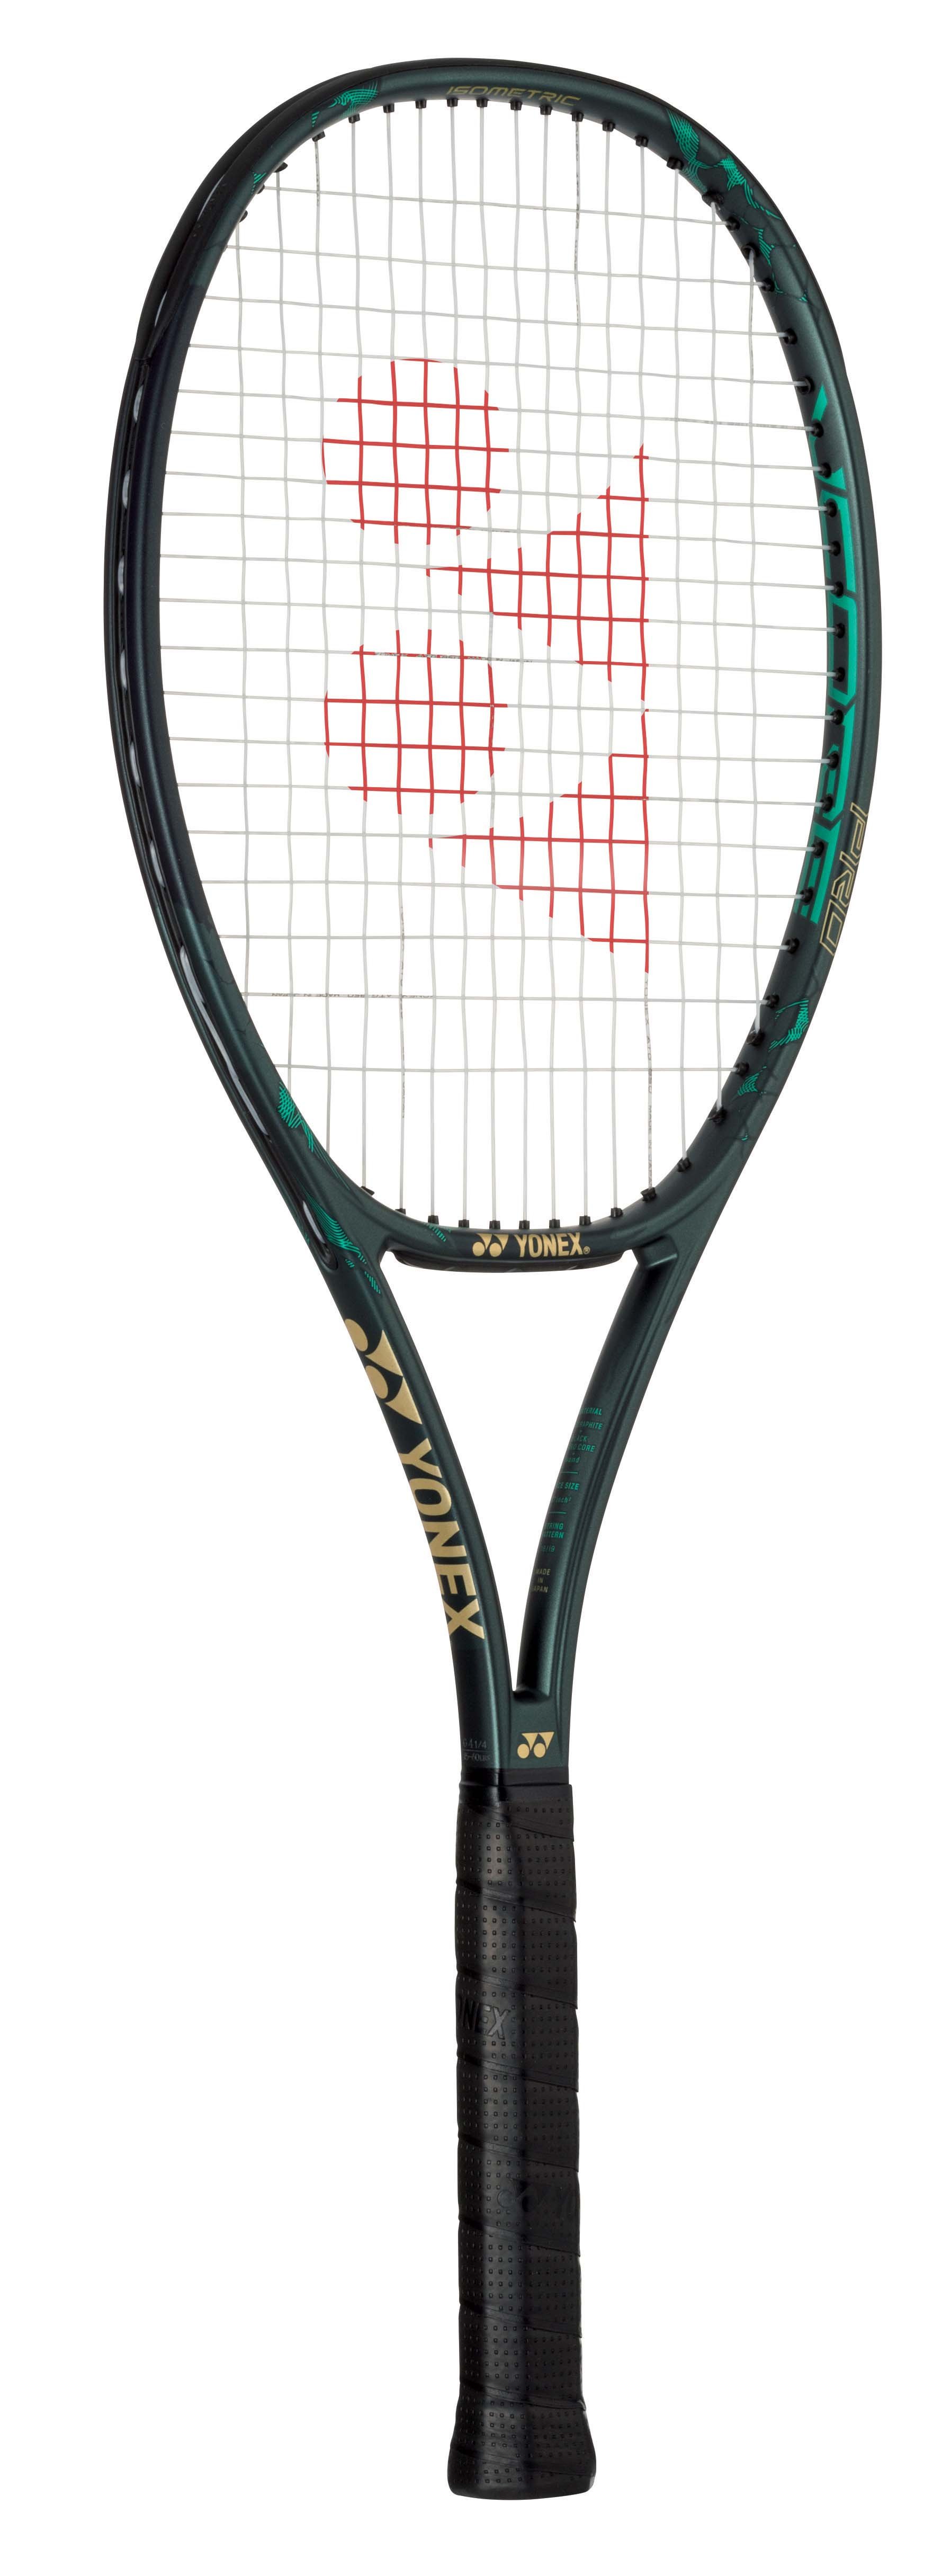 Yonex New VCore Pro 97L 97in/290g grün Tennisschläger unbesaitet